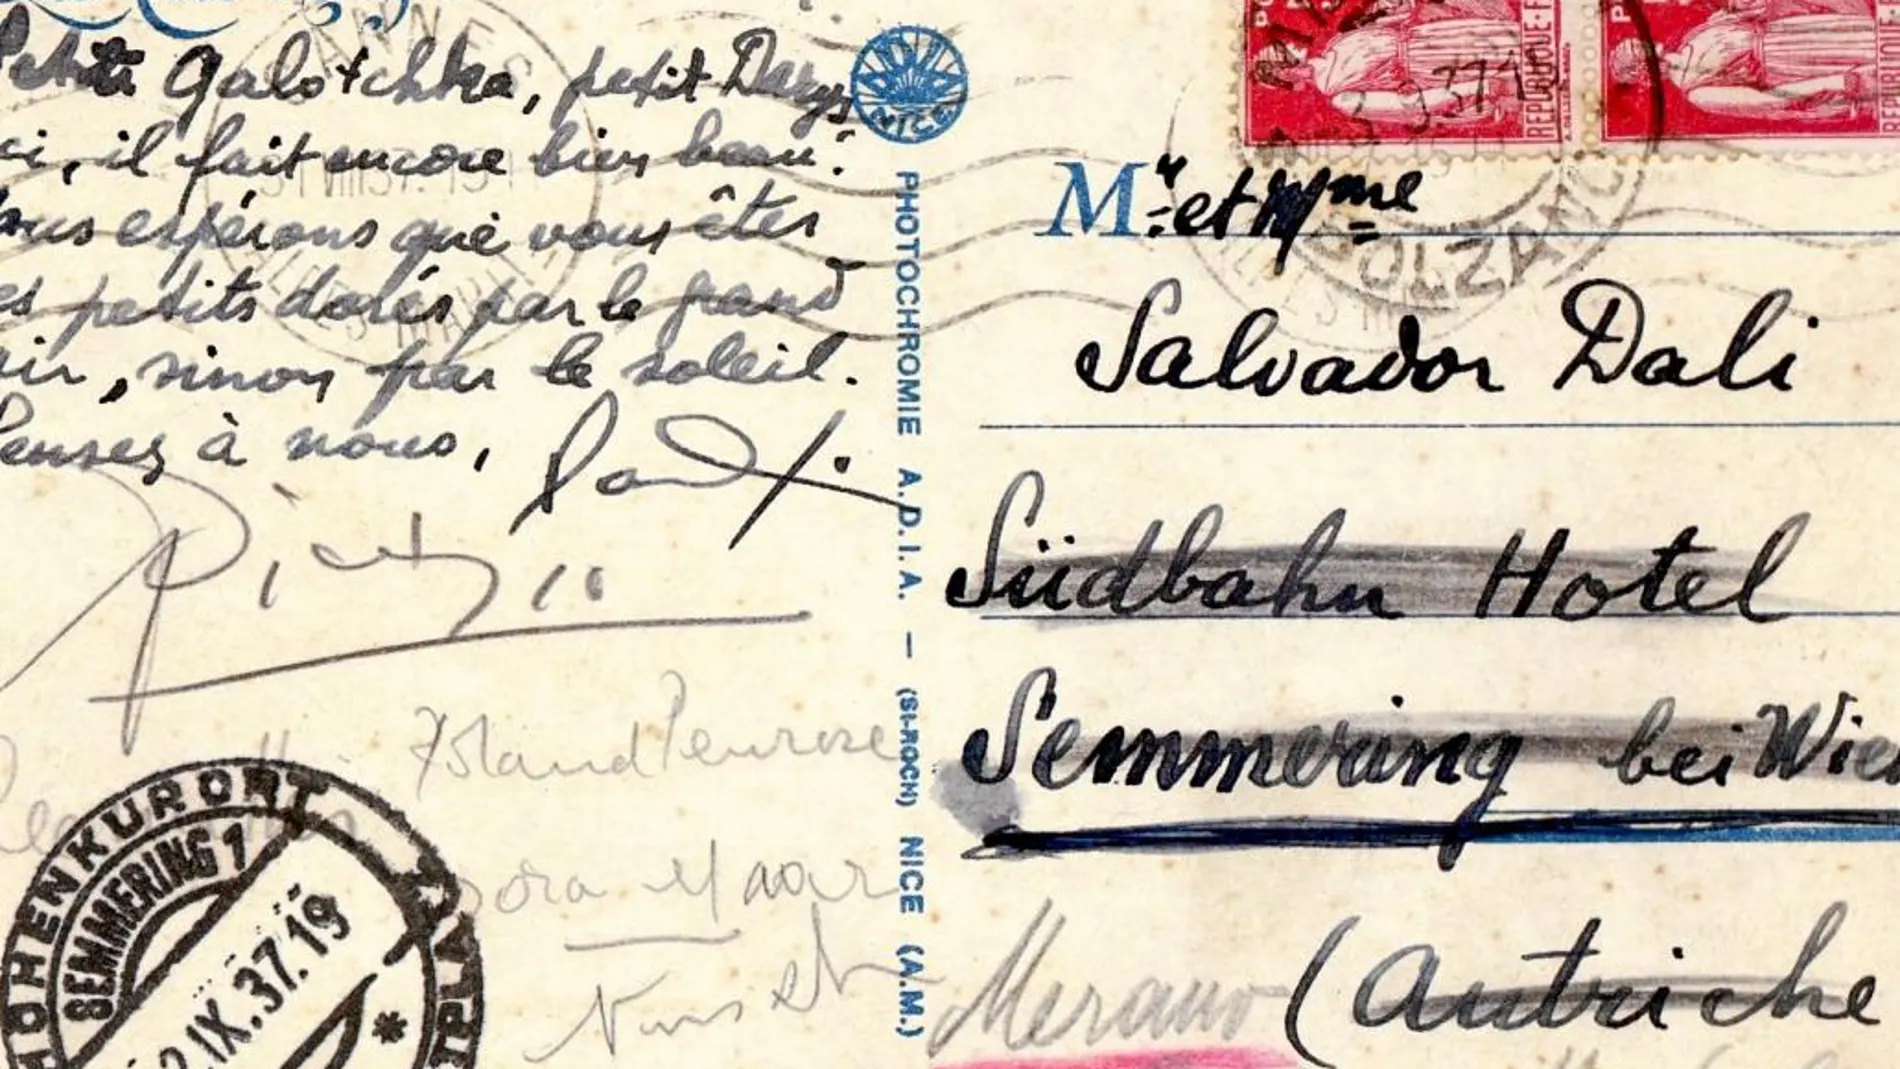 El libro reproduce una postal inédita dirigida a Salvador Dalí firmada por Picasso